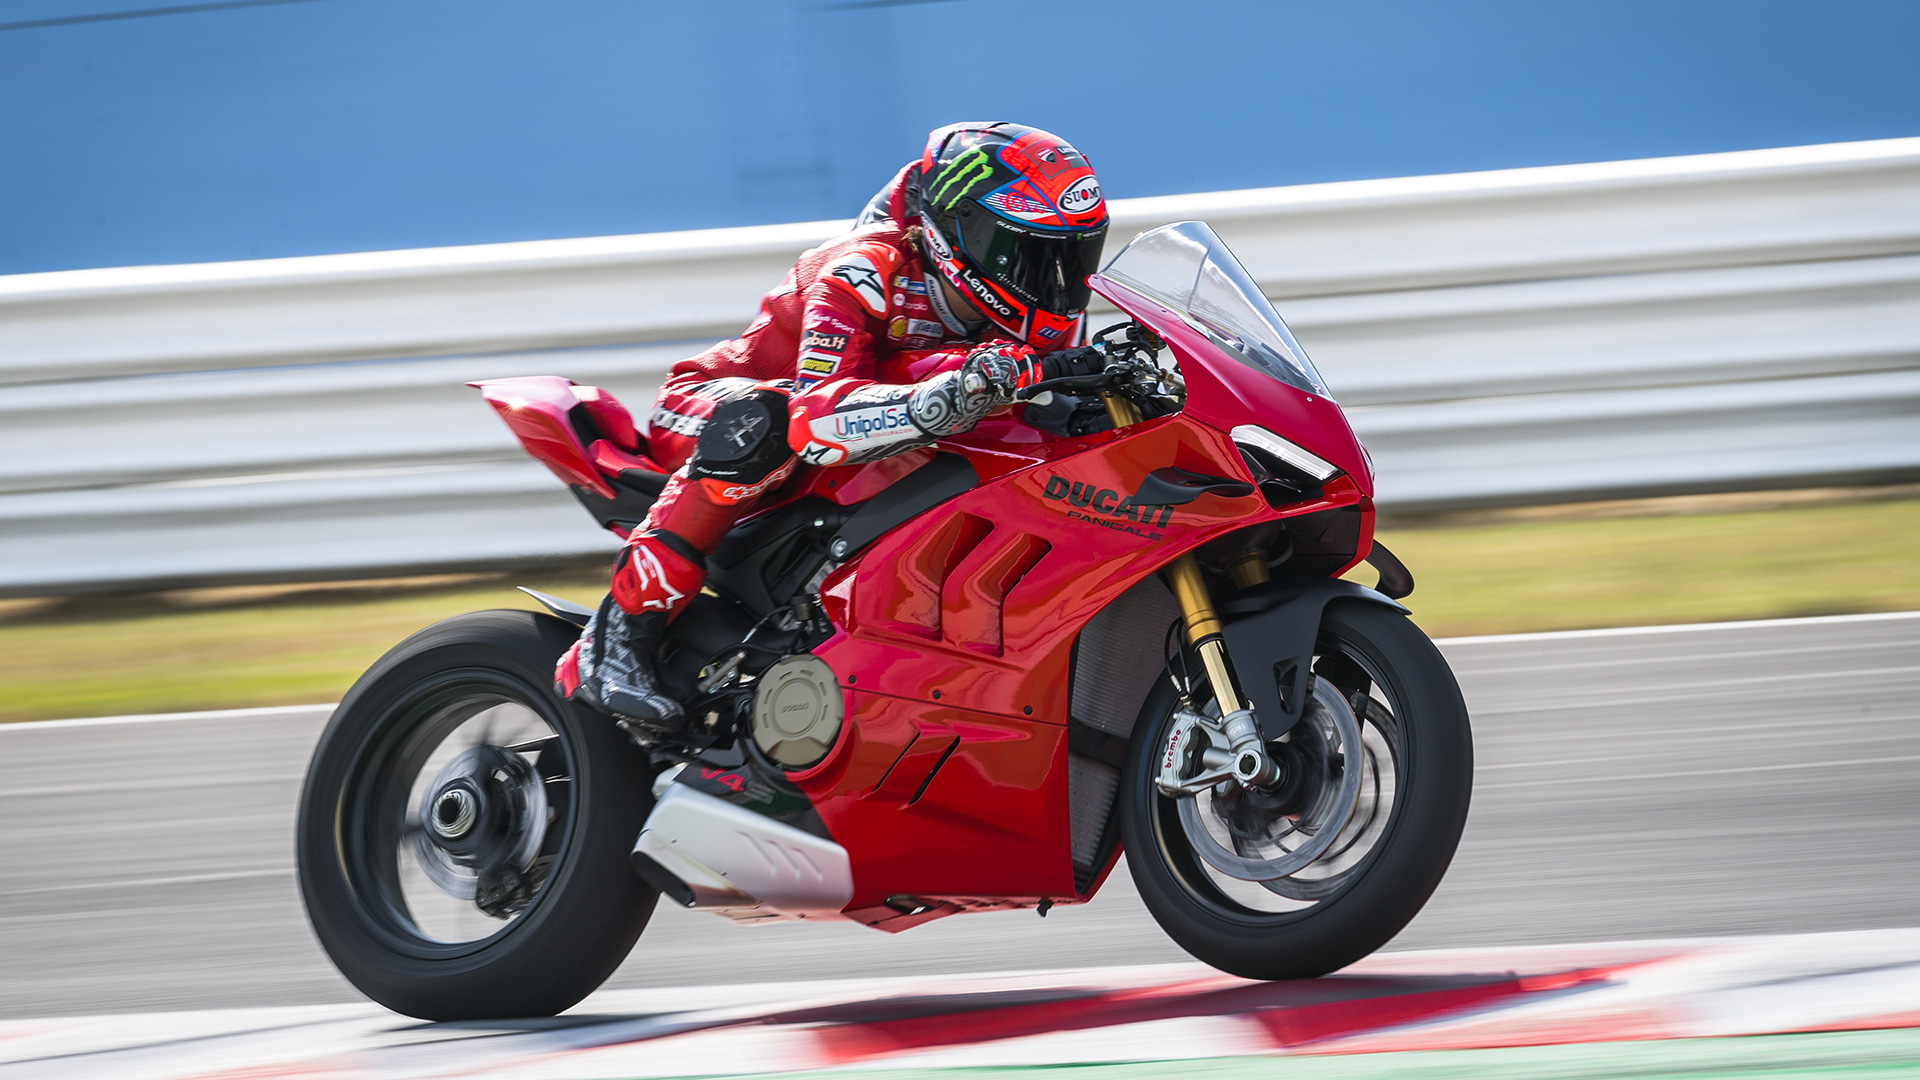 A nova moto Ducati de mais de 240 cavalos pronta para desembarcar